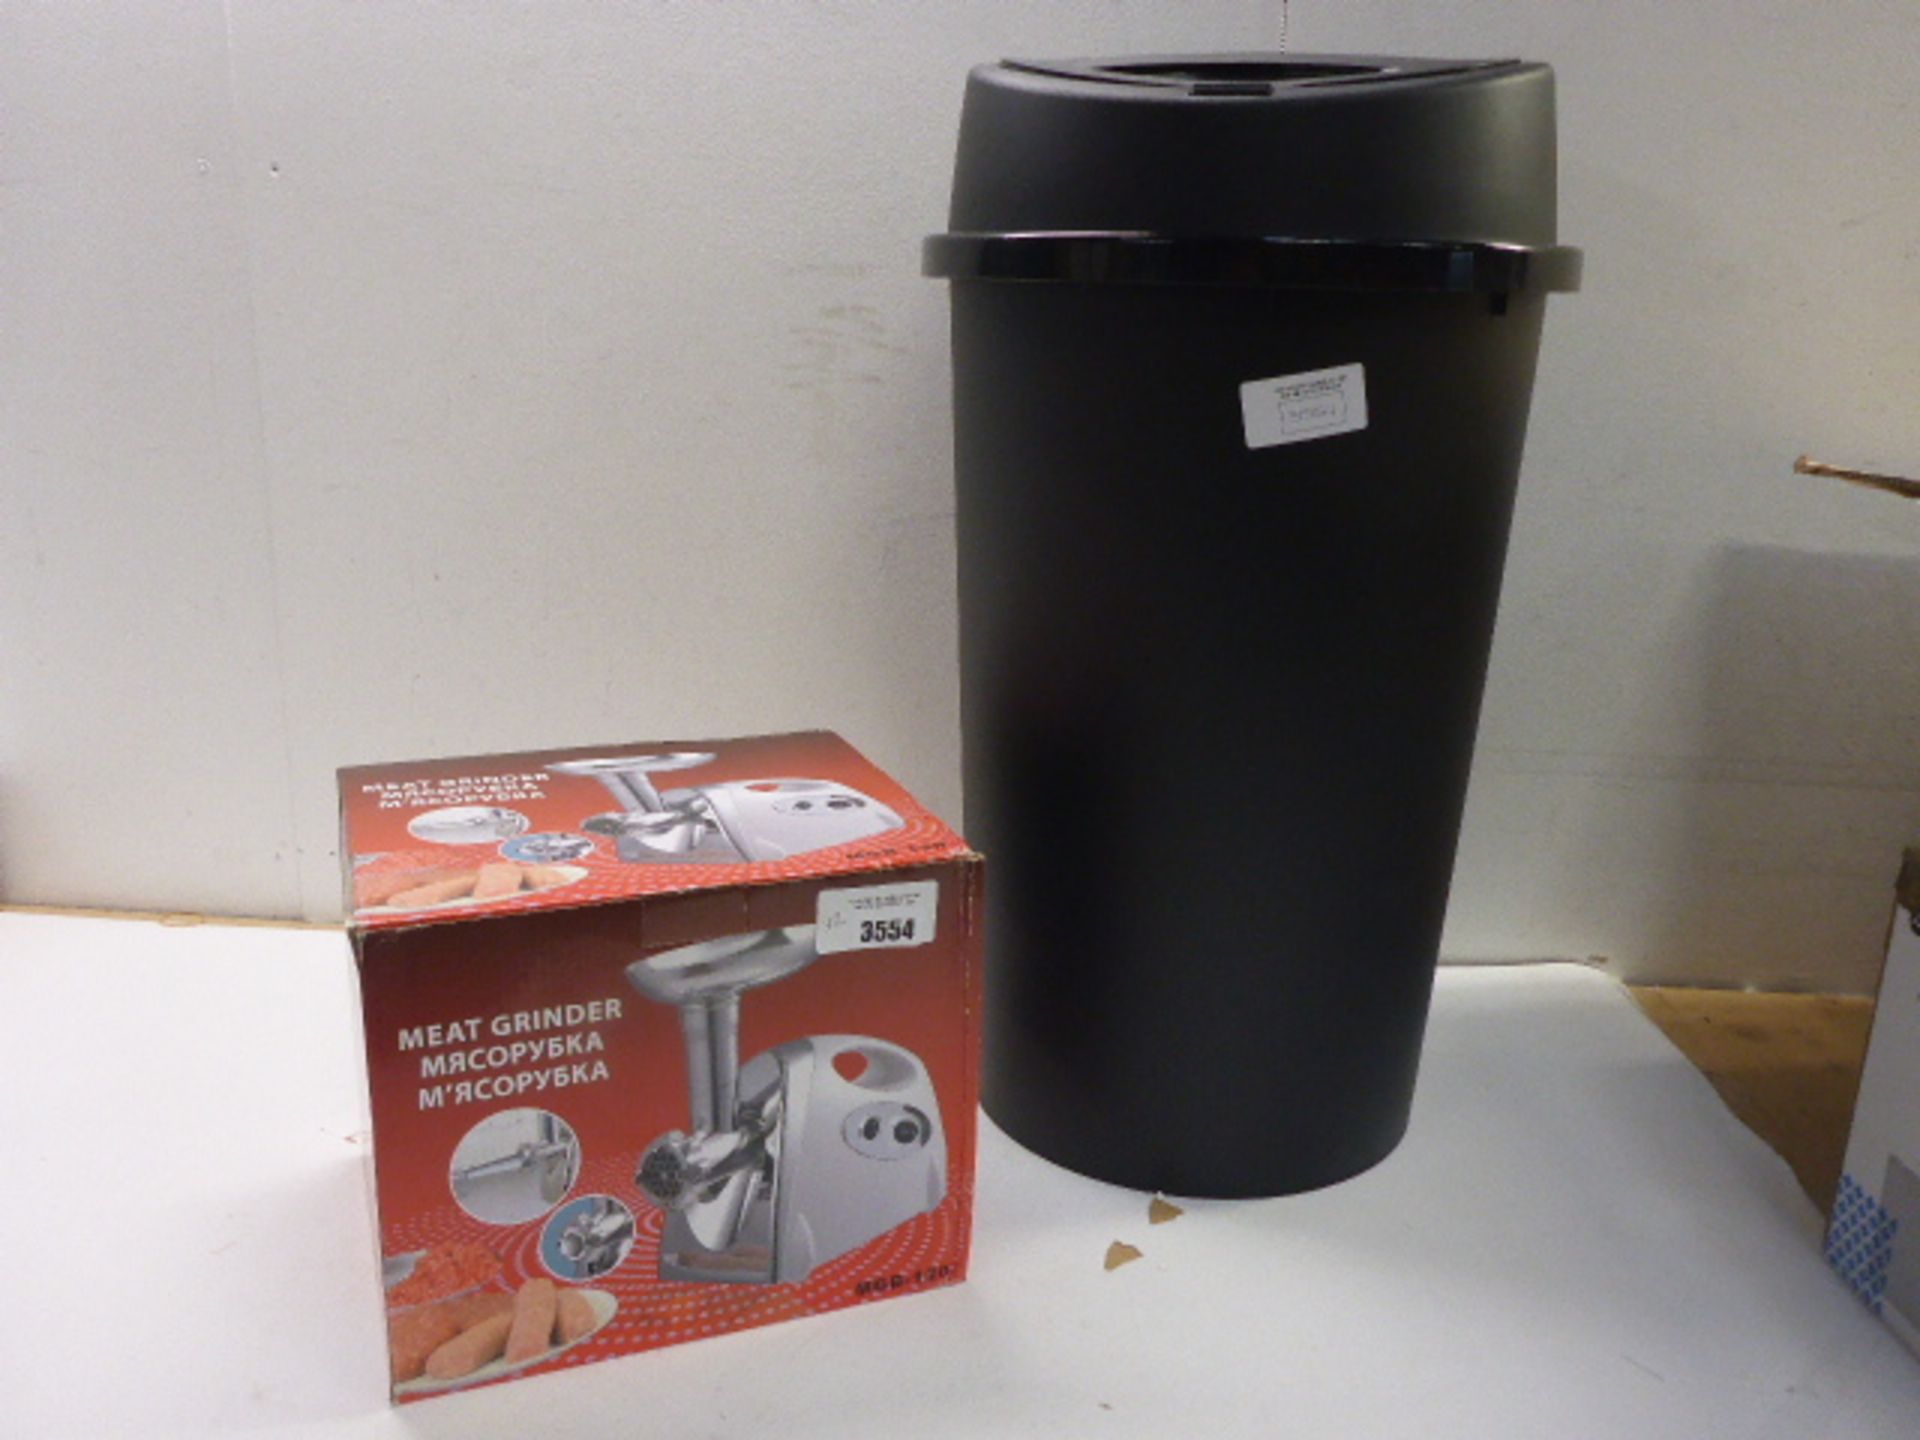 Meat grinder and large plastic bin